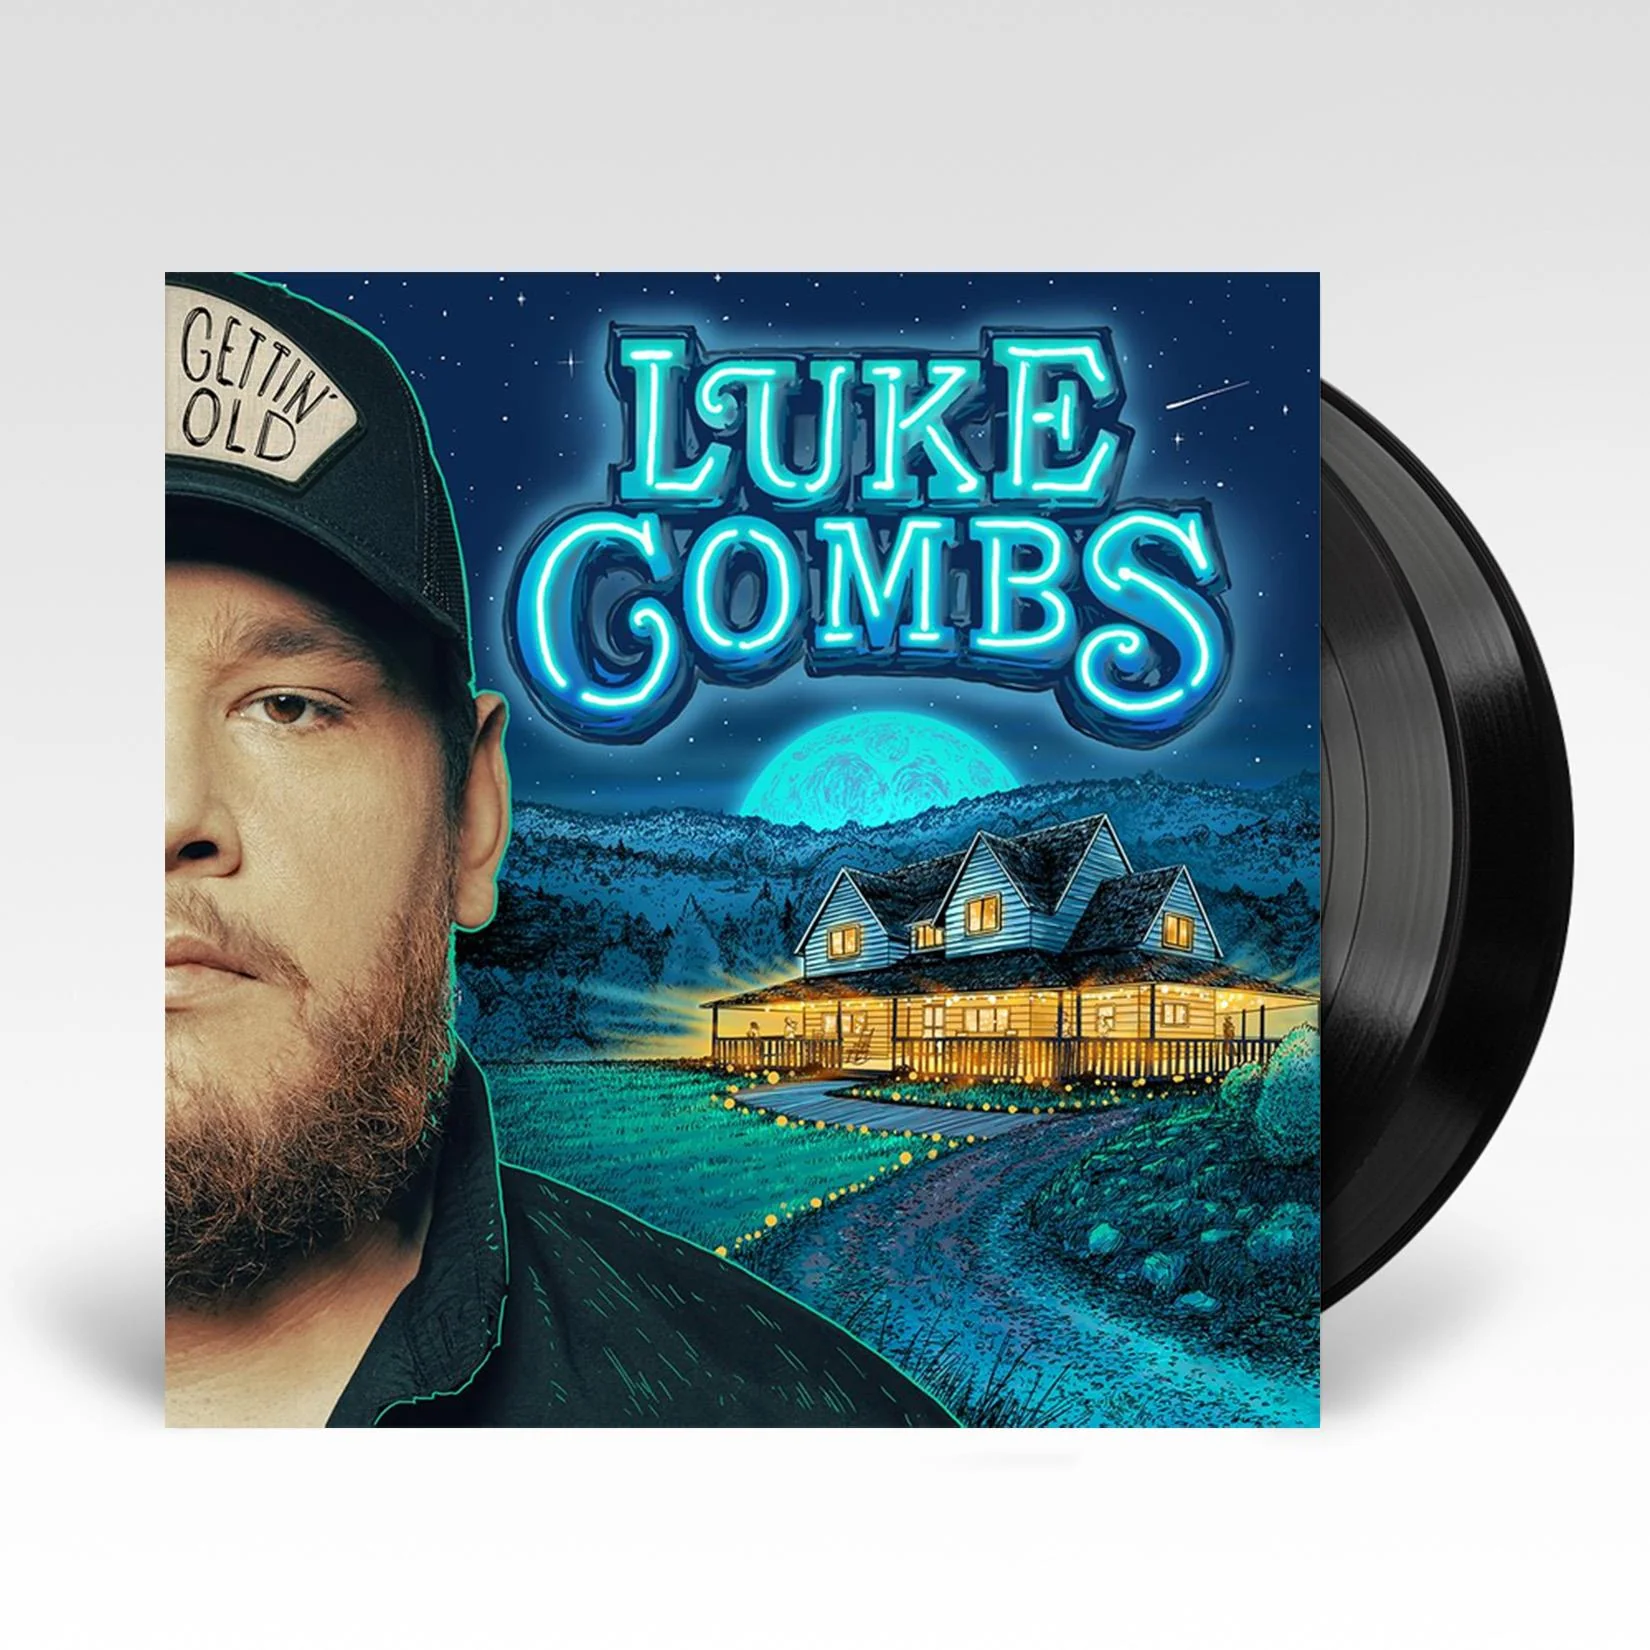 LUKE COMBS - Gettin Old Vinyl Black 